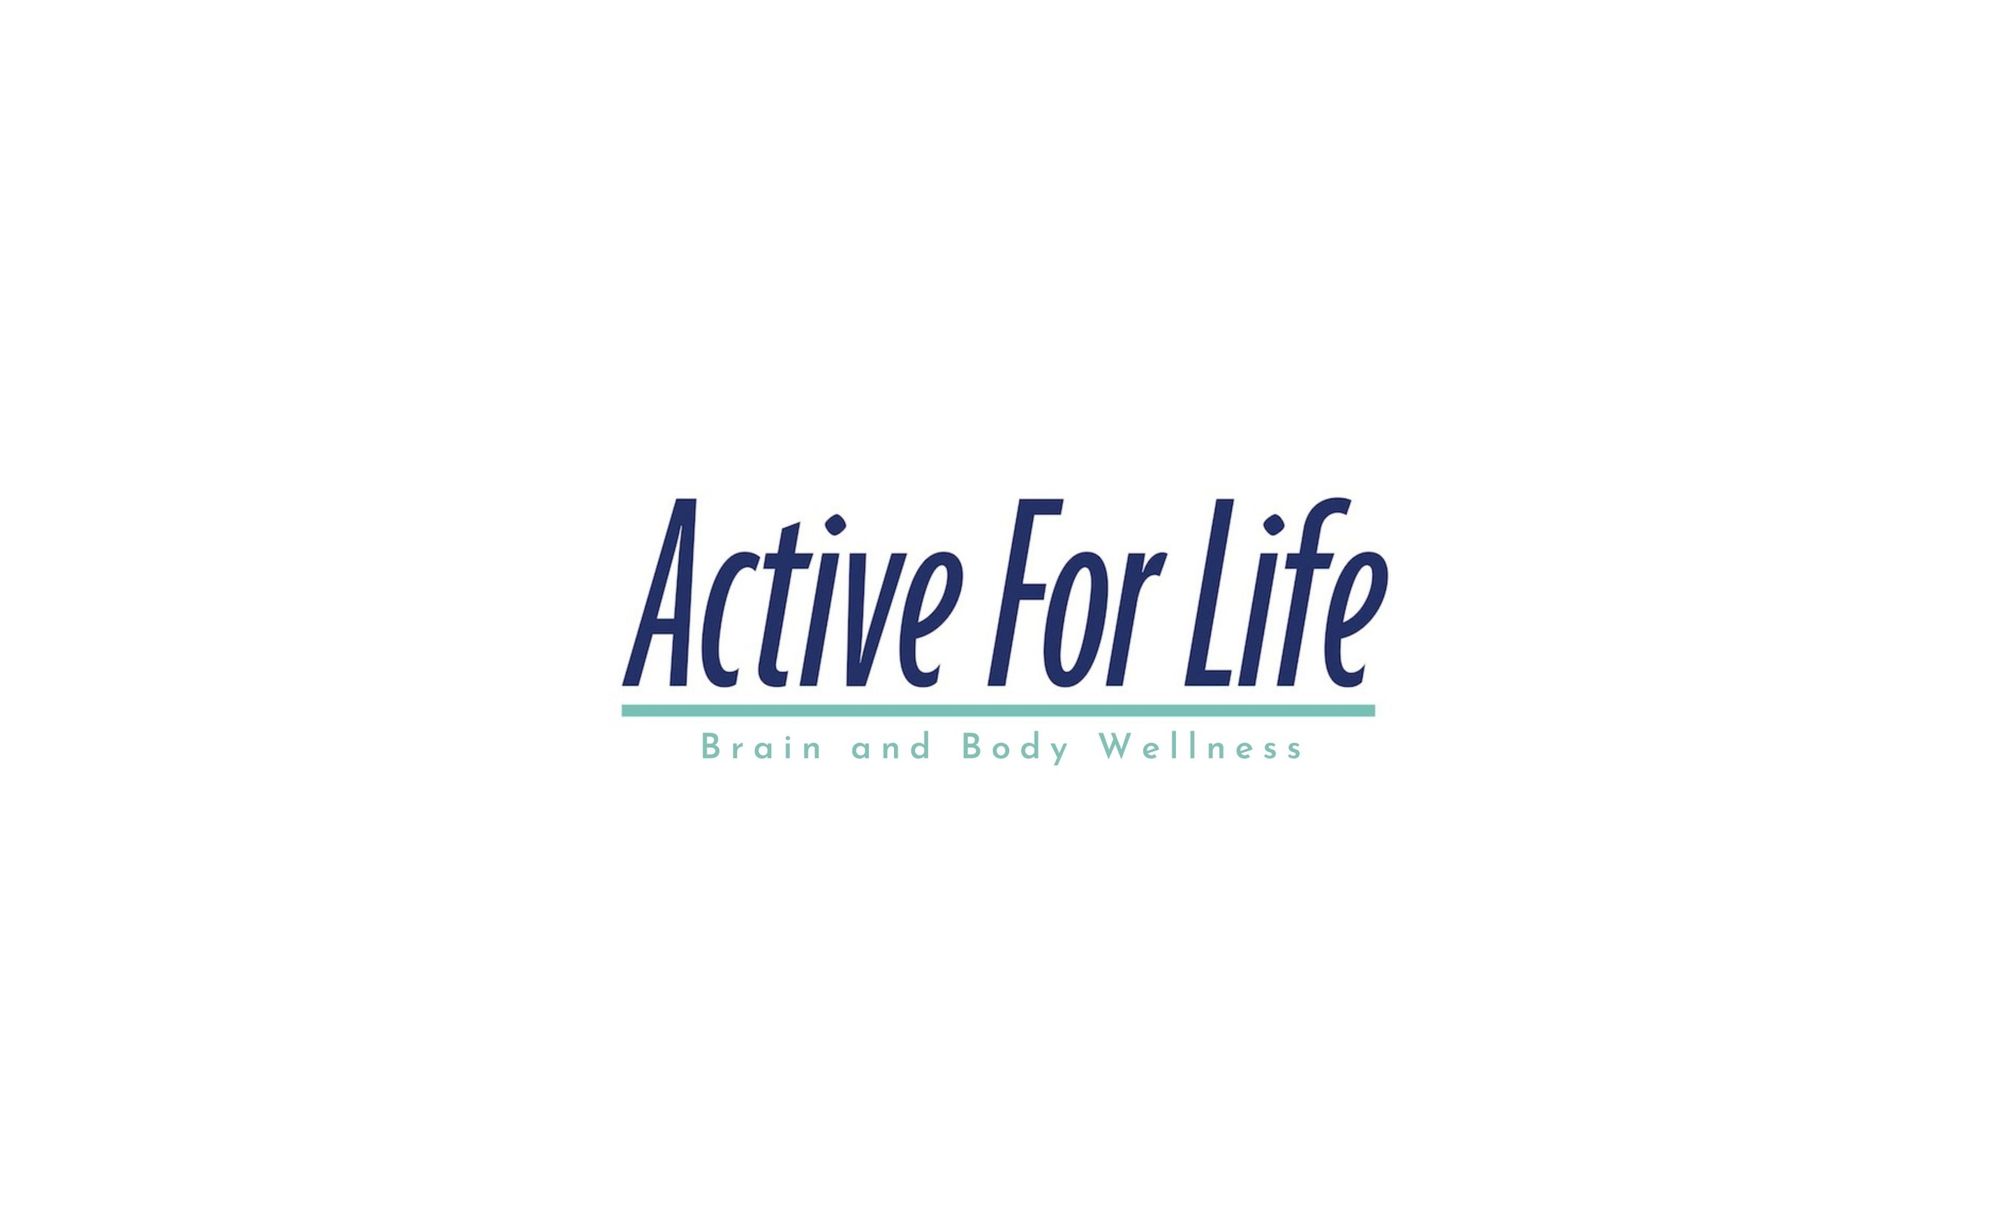 Providing Unique Health & Wellness Services - Active for Life